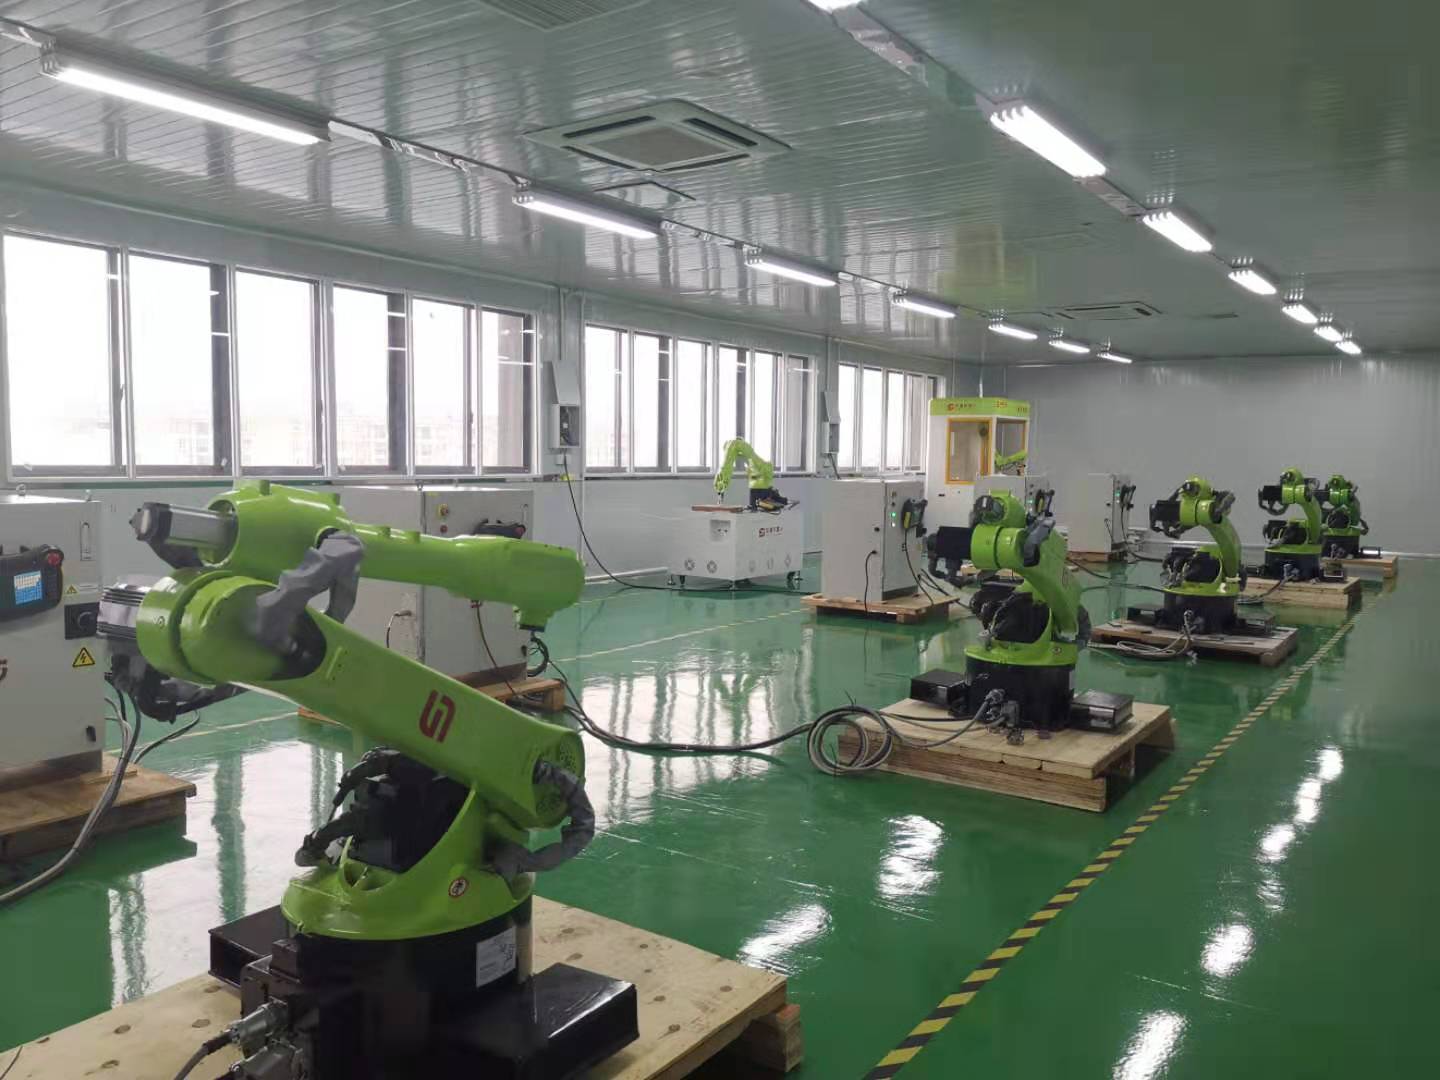 Live video of fertilizer assembly line palletizing robot work